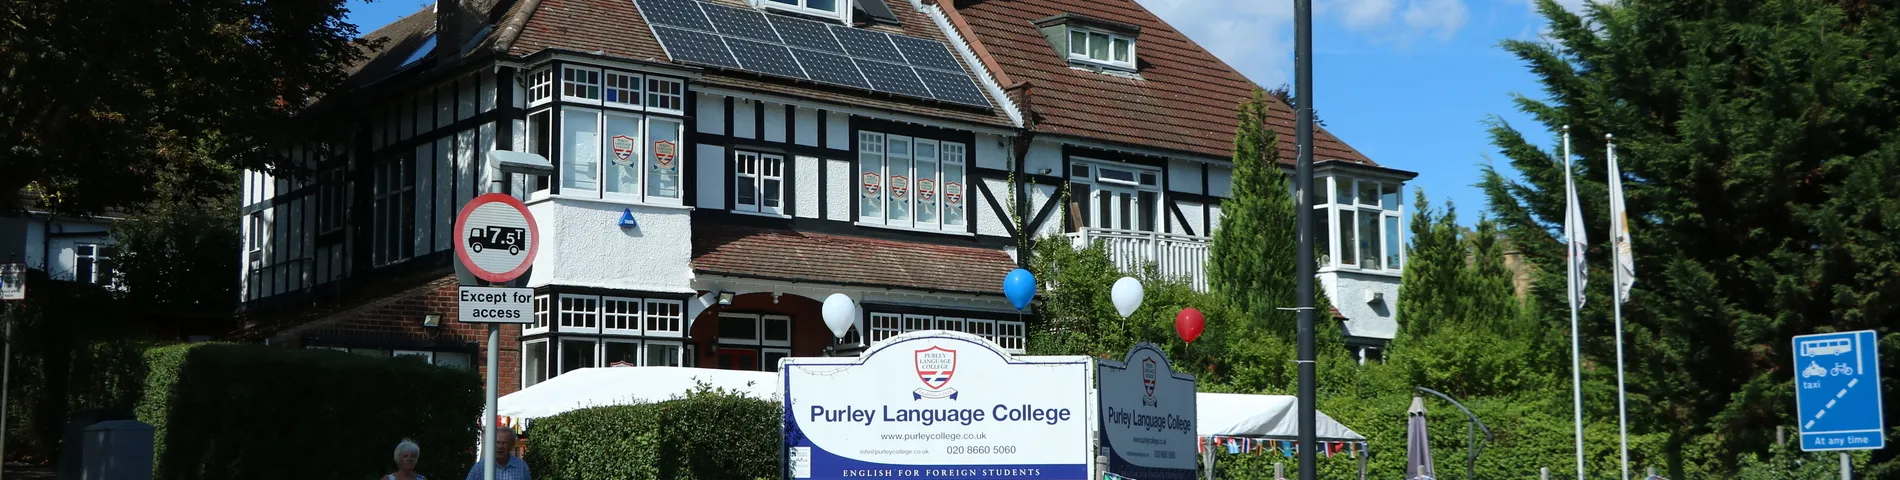 Purley Language College resim 1